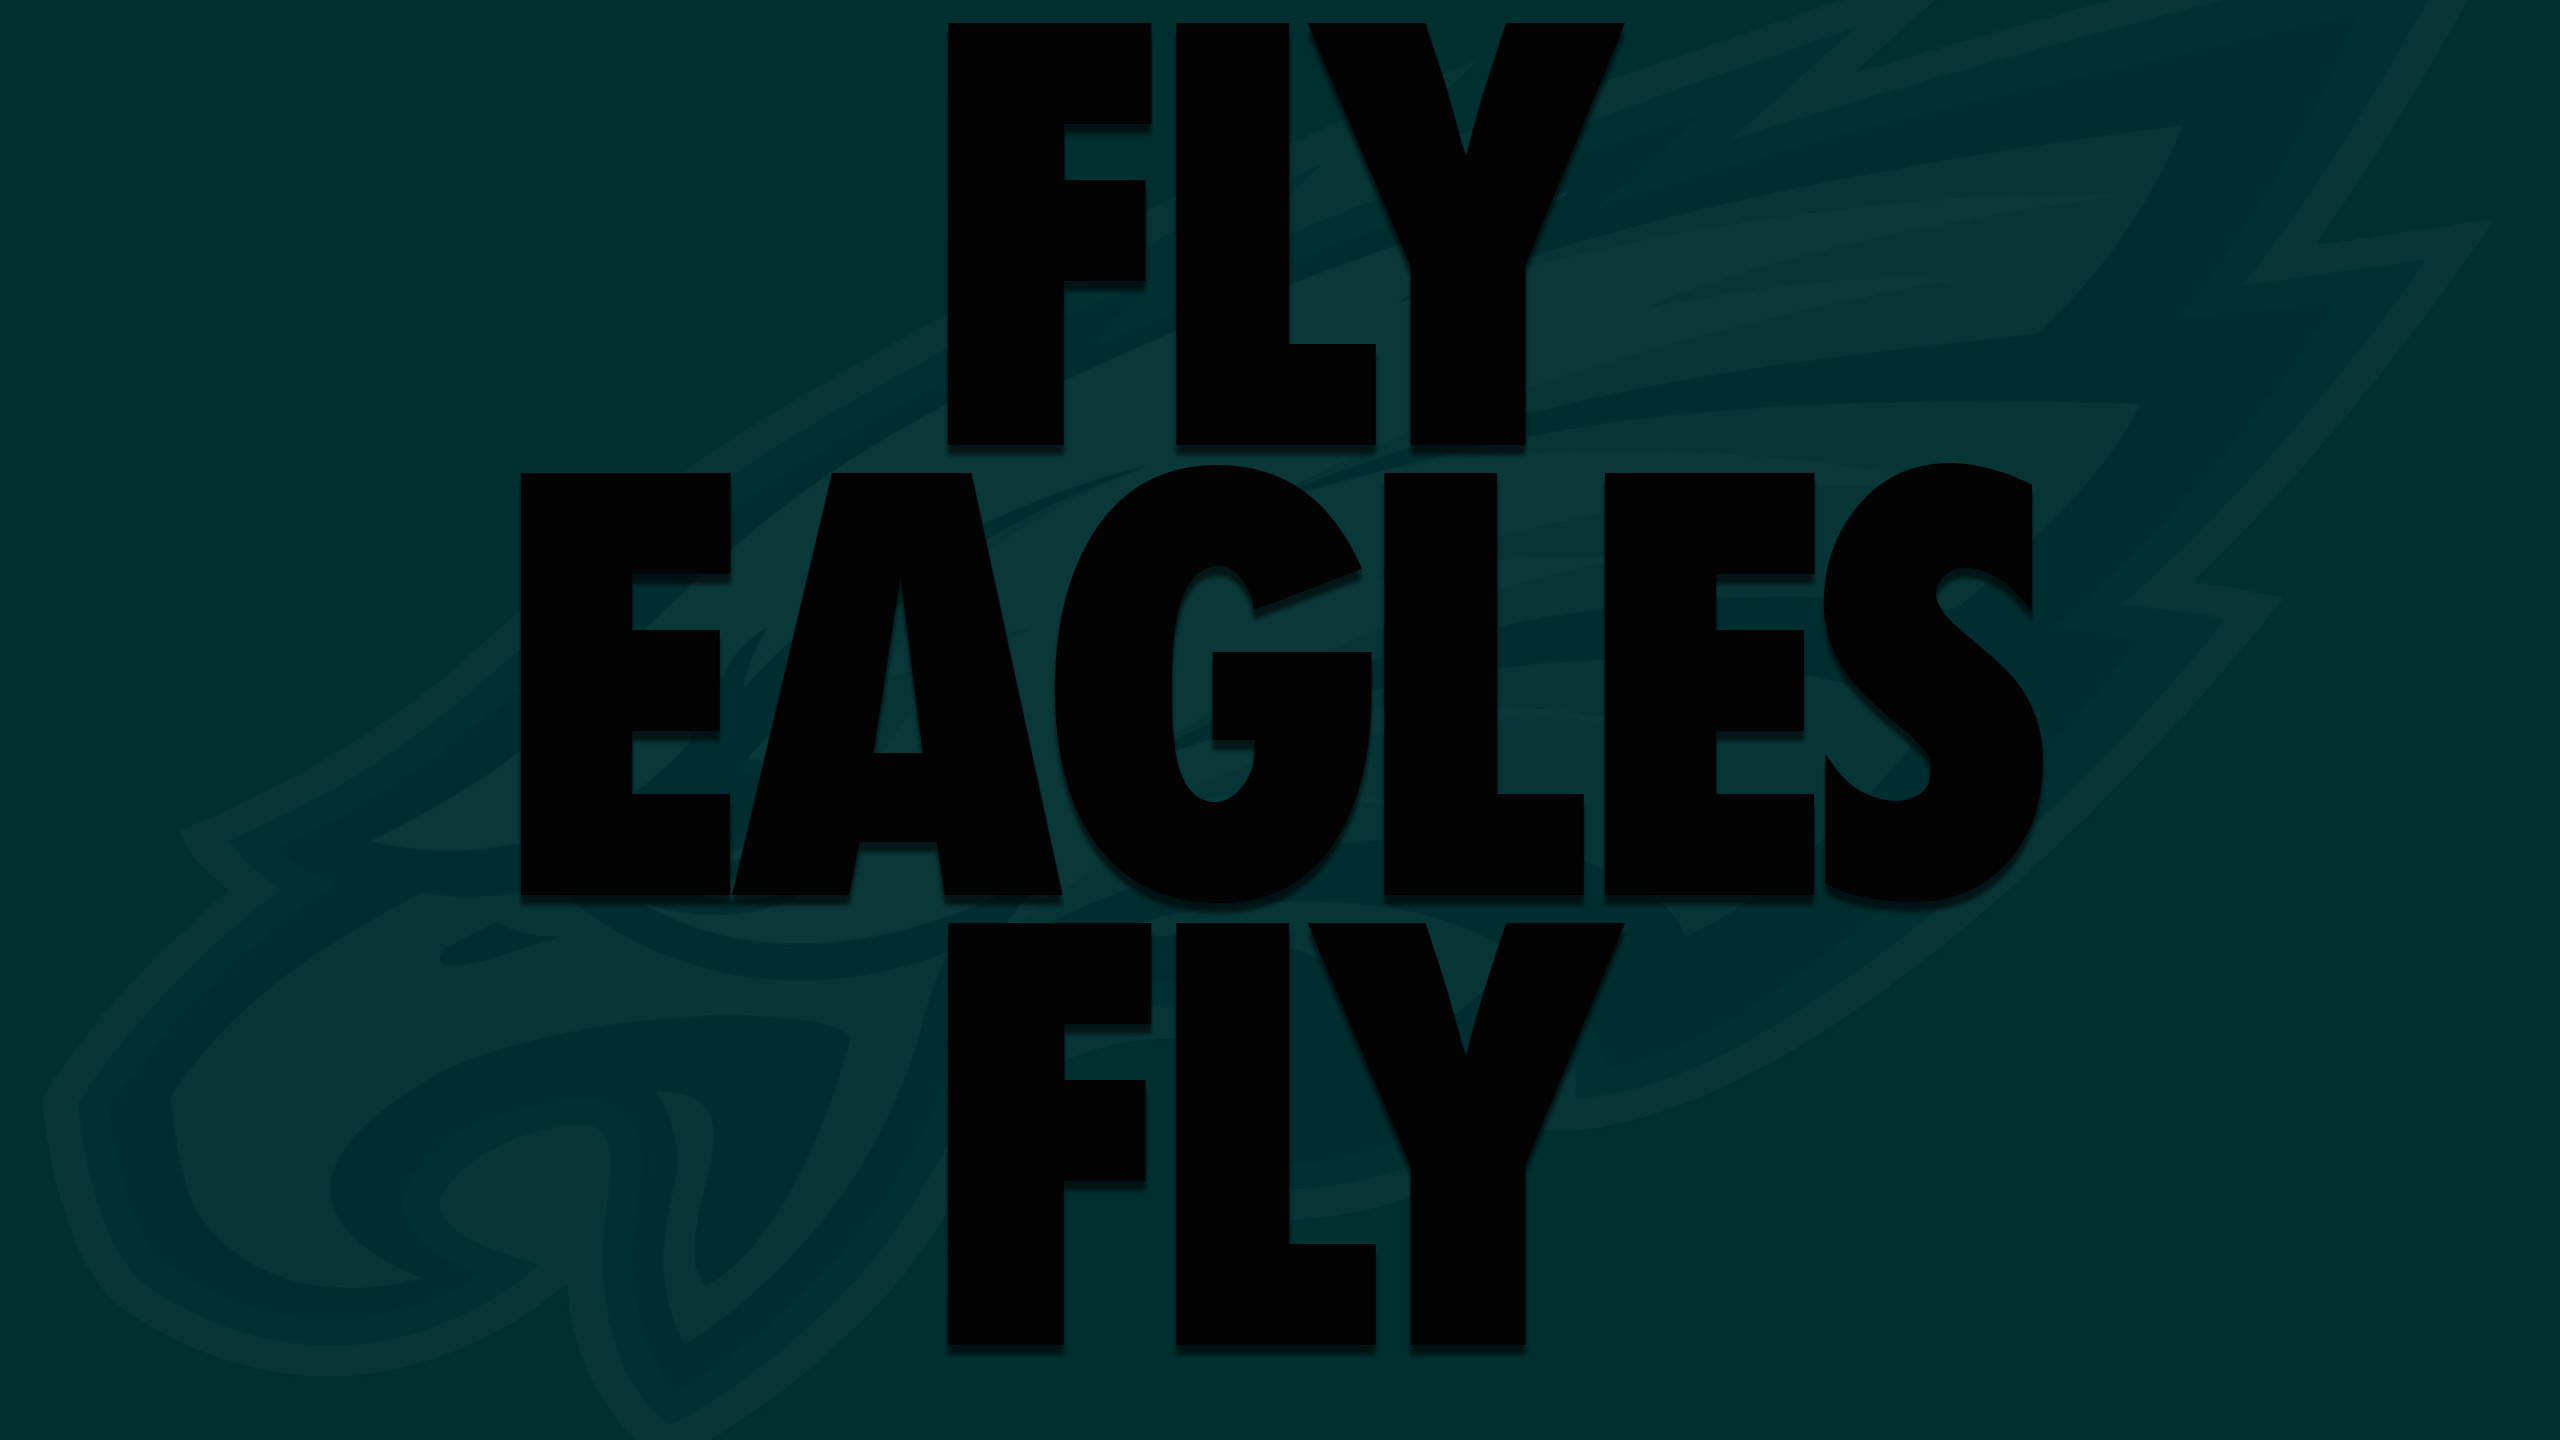 Philadelphia Eagles 2018 Schedule